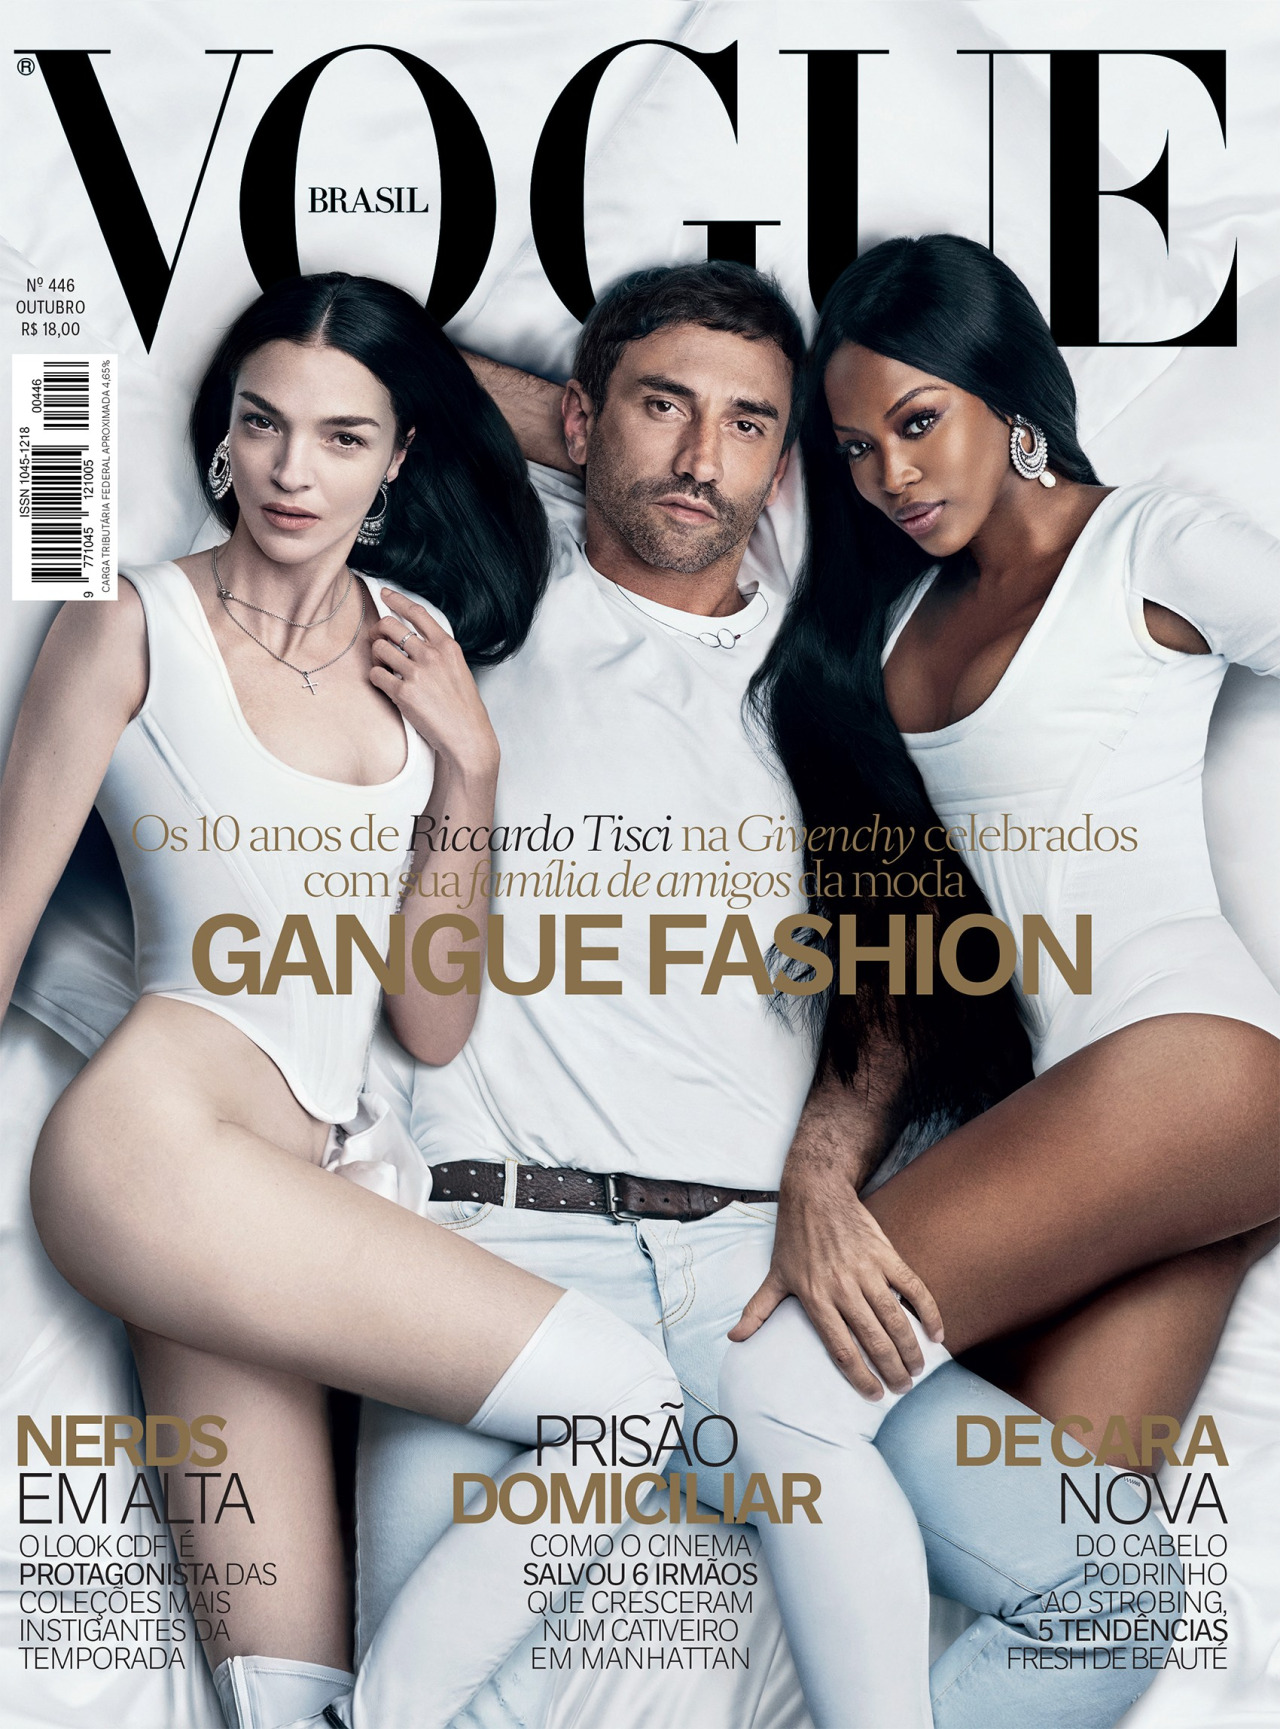 Riccardo Tisci Vogue Brazil 2015 Cover